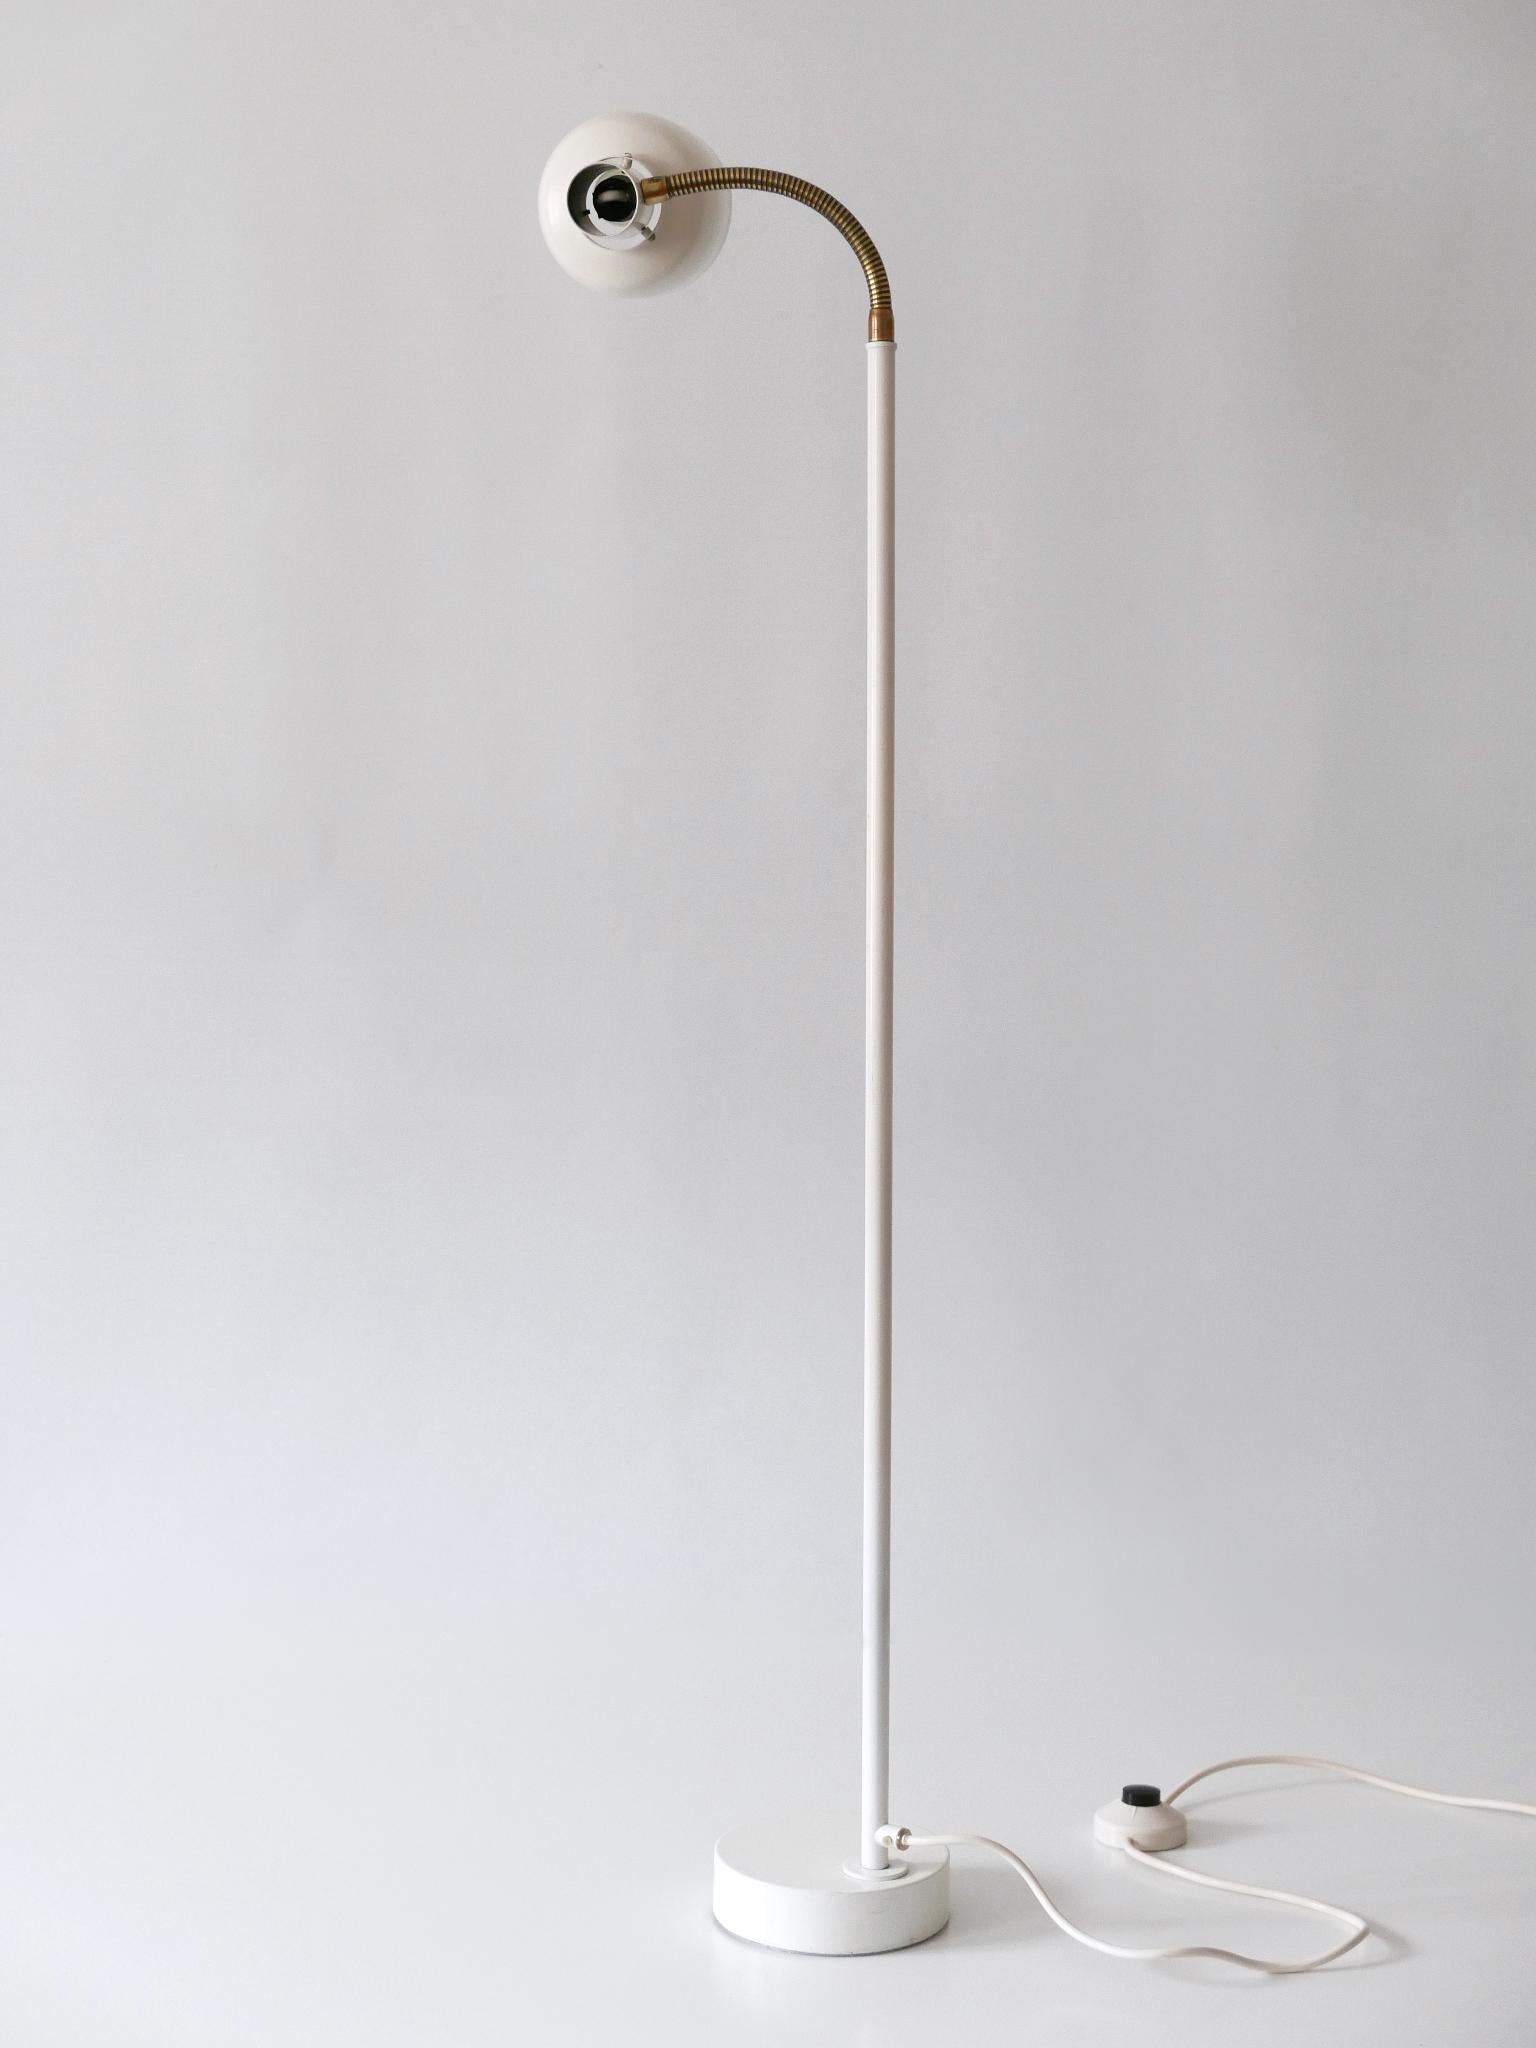 Rare Mid-Century Modern Floor Lamp or Reading Light by Hans-Agne Jakobsson 1960s For Sale 8